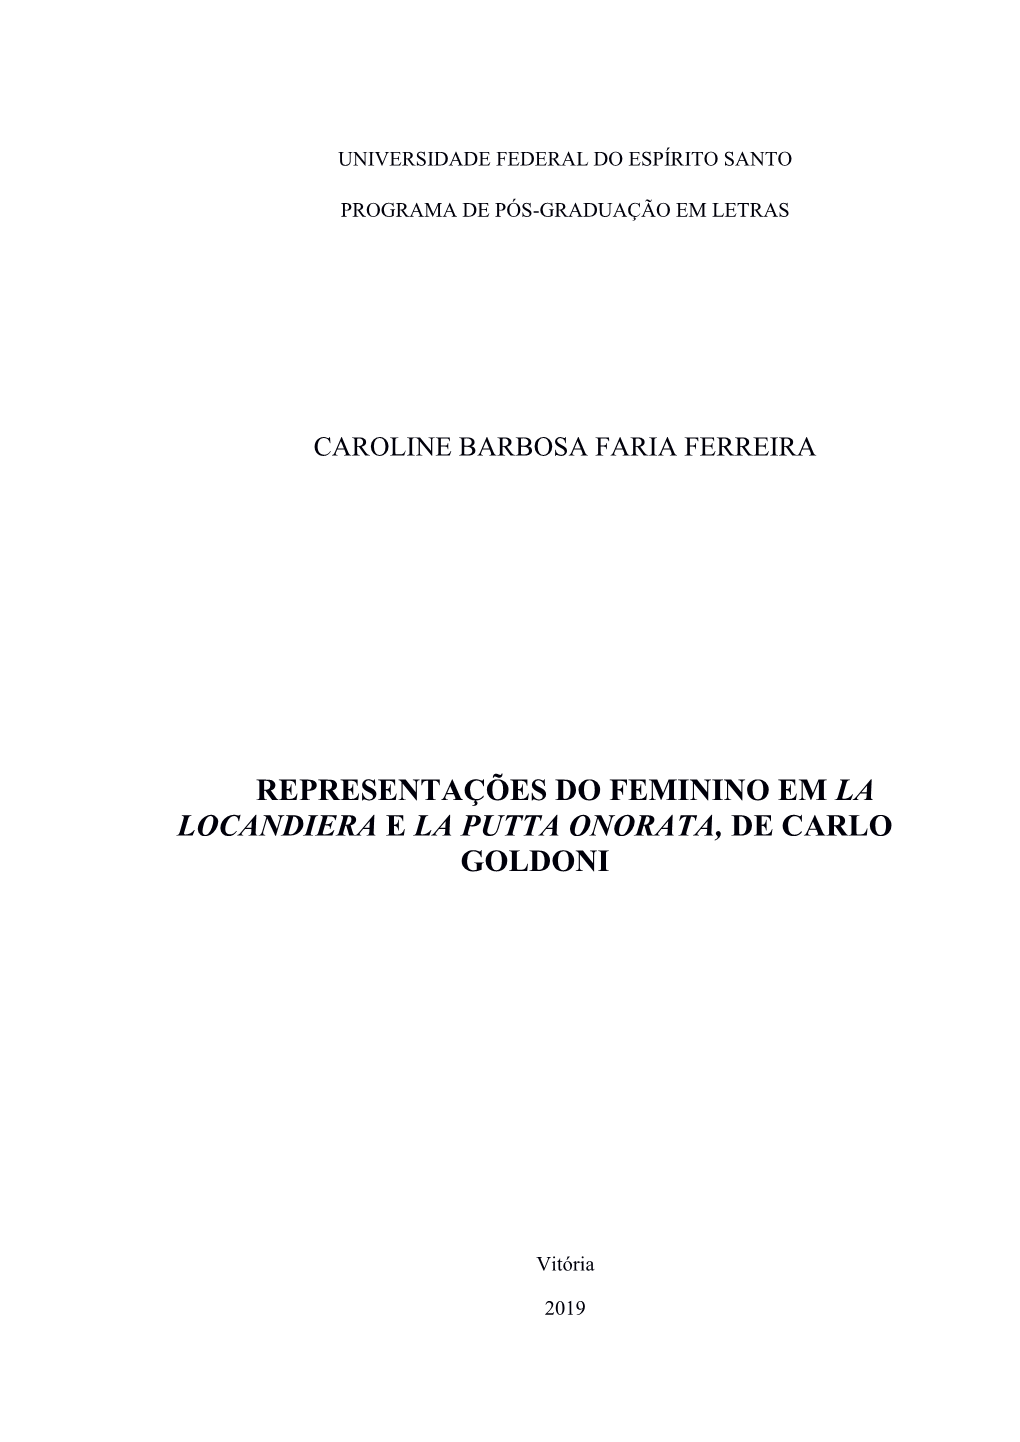 Representações Do Feminino Em La Locandiera E La Putta Onorata, De Carlo Goldoni